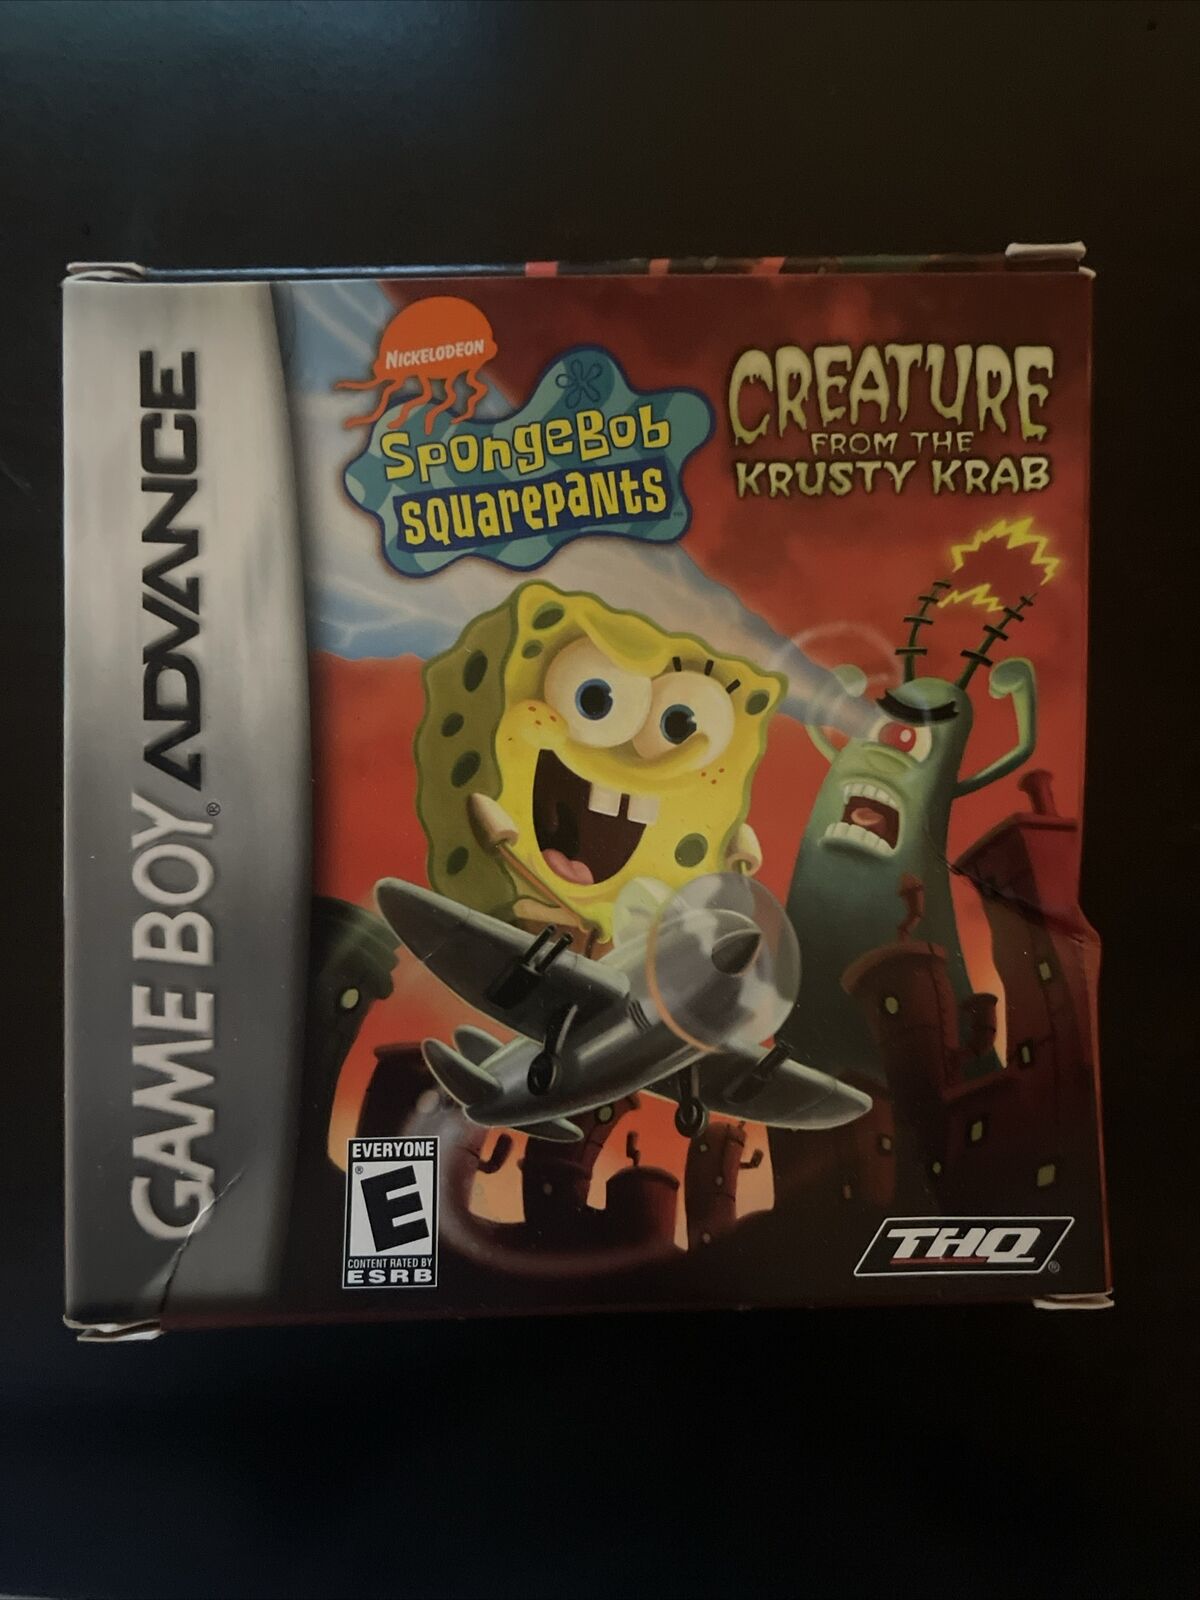 SpongeBob SquarePants Creature From Krusty Krab GameBoy Advance CIB